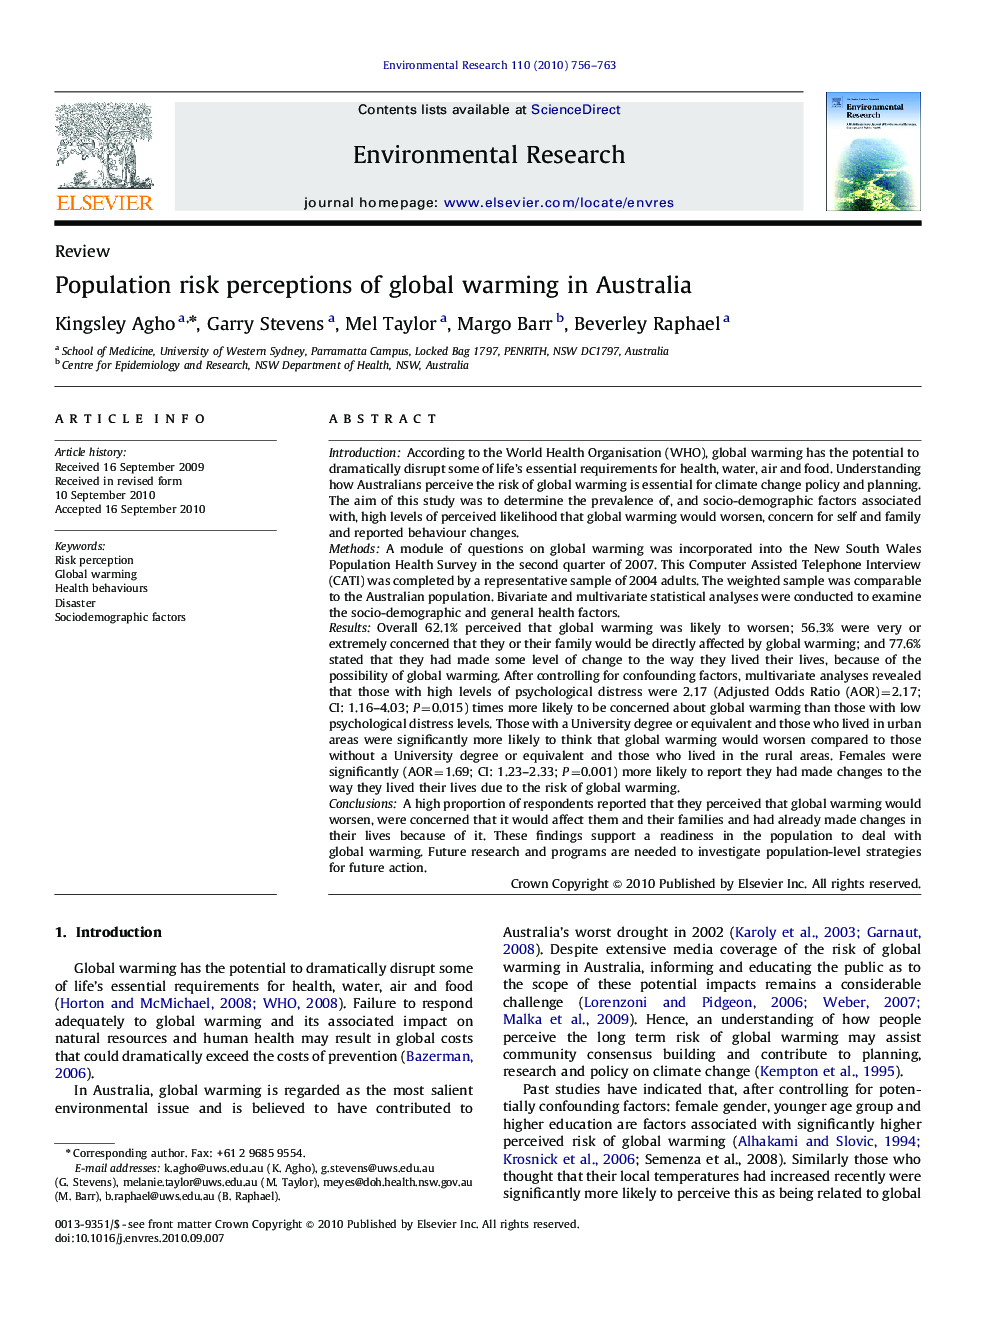 Population risk perceptions of global warming in Australia